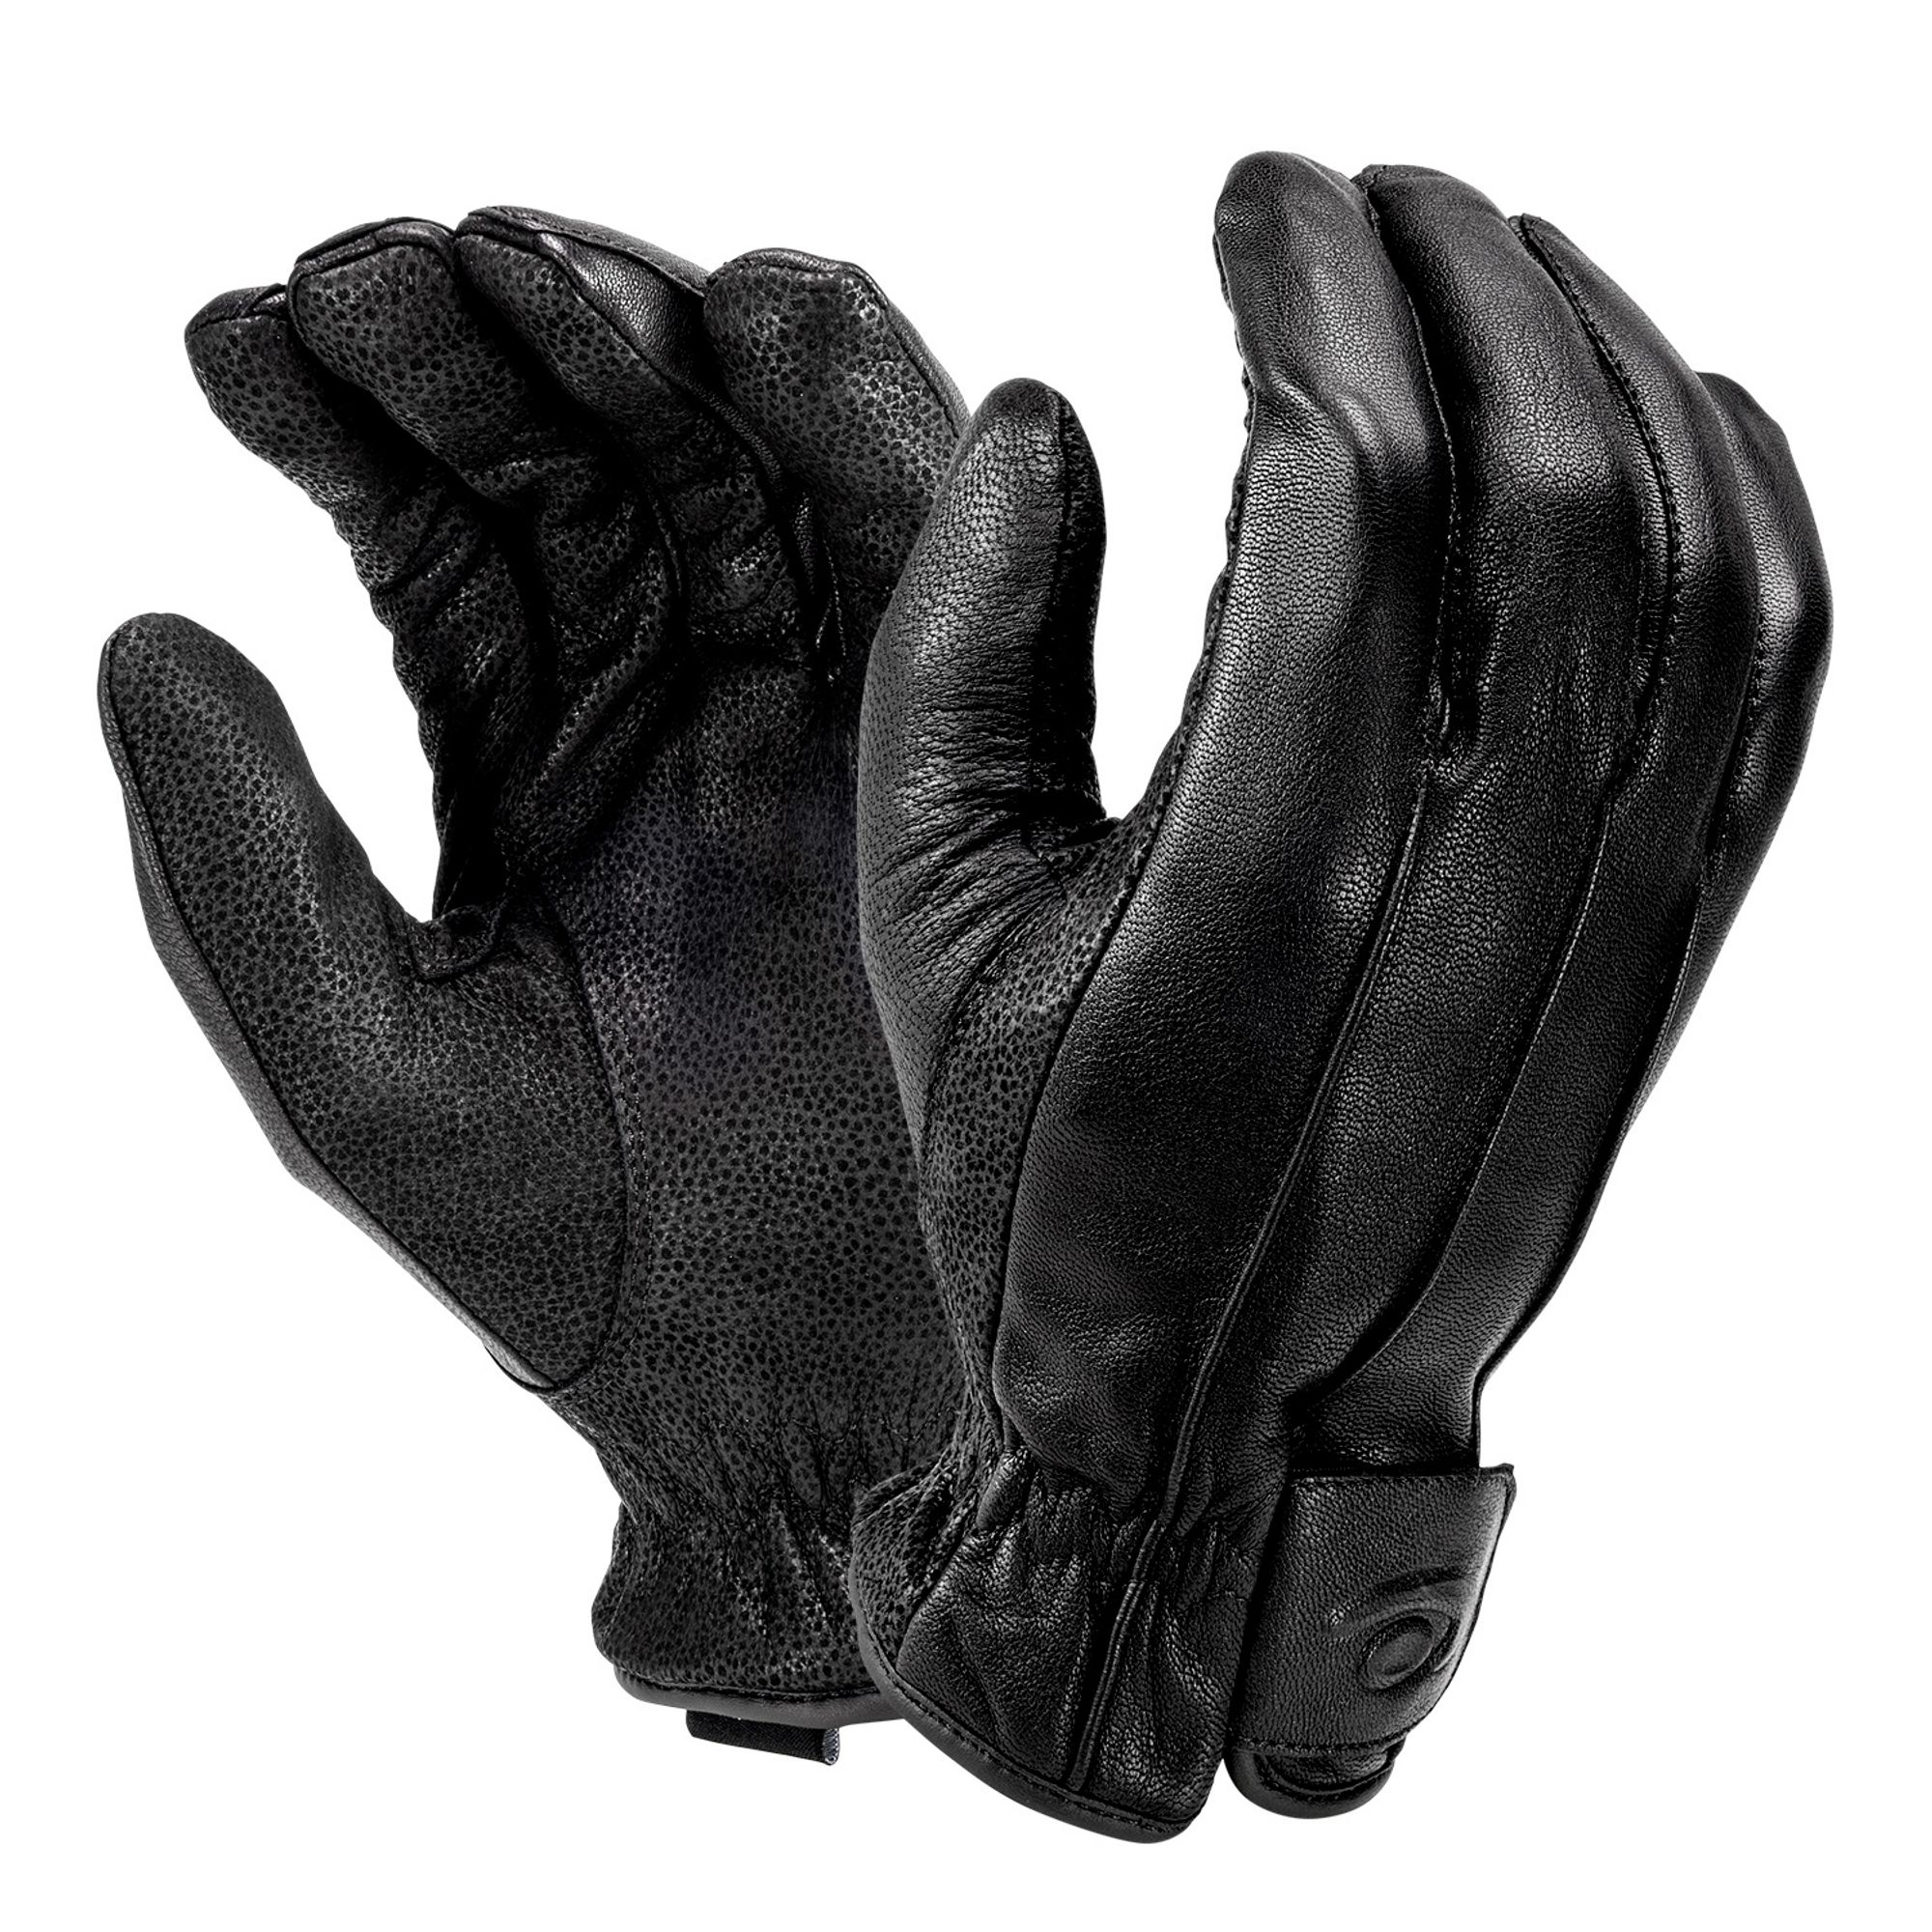 Leather Insulated Winter Patrol Glove - KRWPG100XL